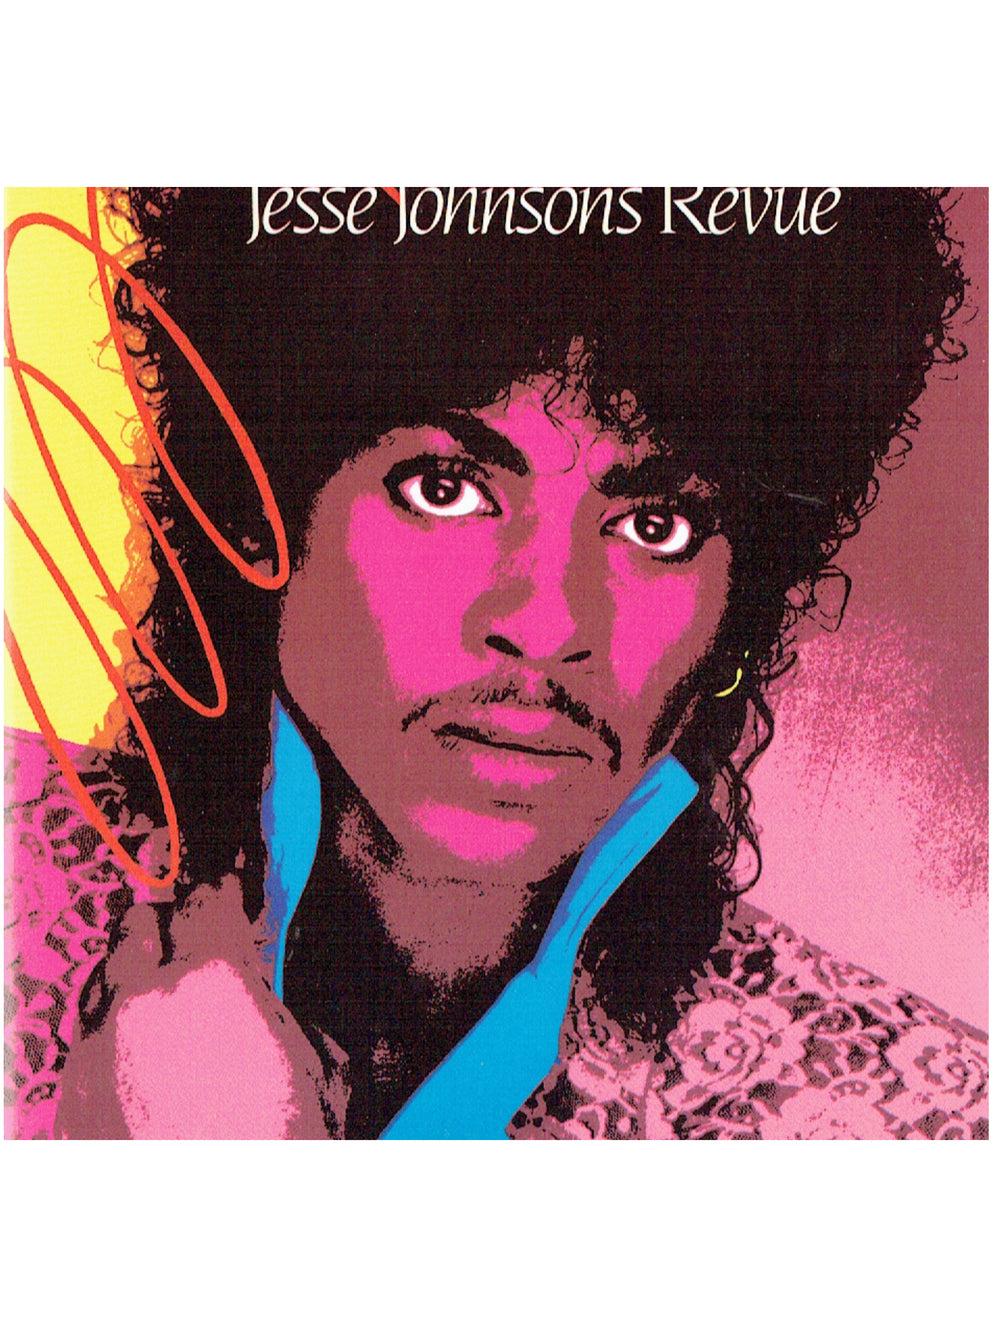 Jesse Johnson's Revue Self Titled CD Album 1985 Release Prince